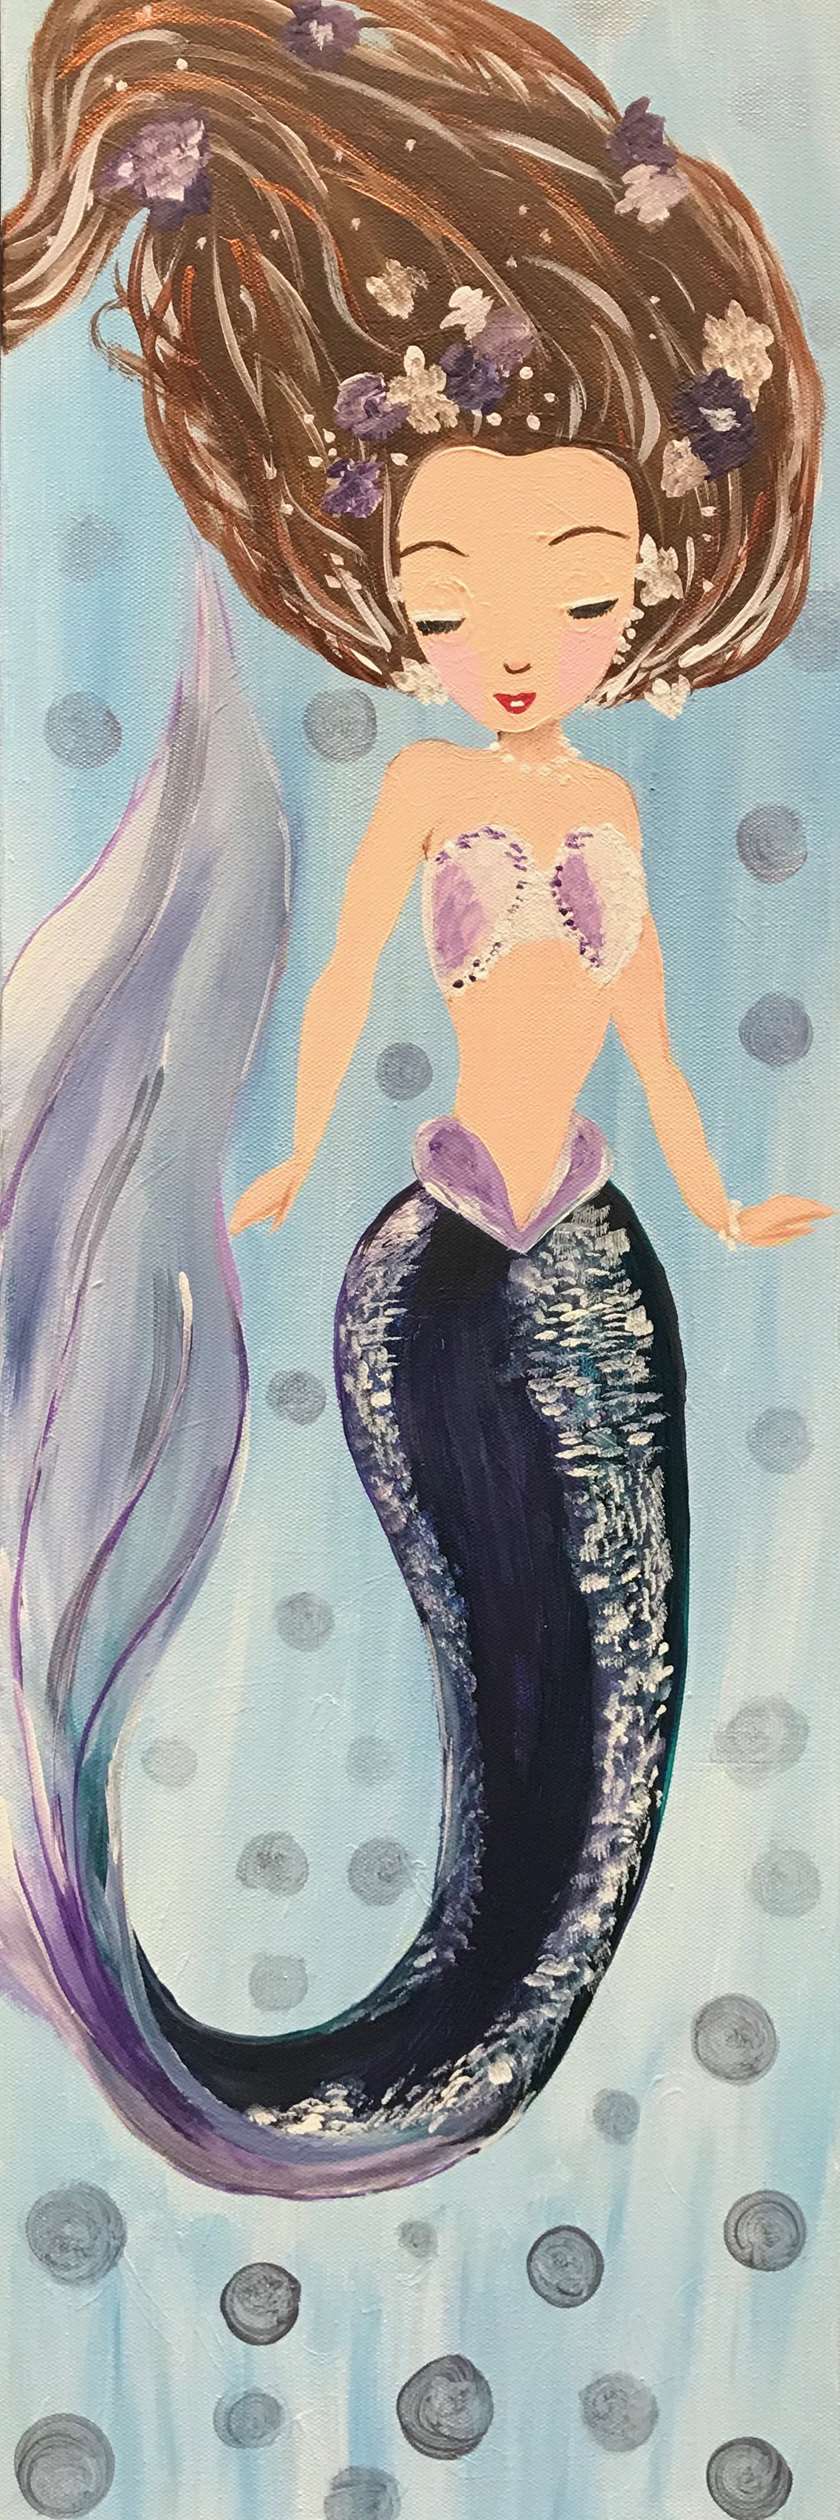 SINGLE DAY $85 CAMP!  - Theme: The Sea & Mermaid Stories